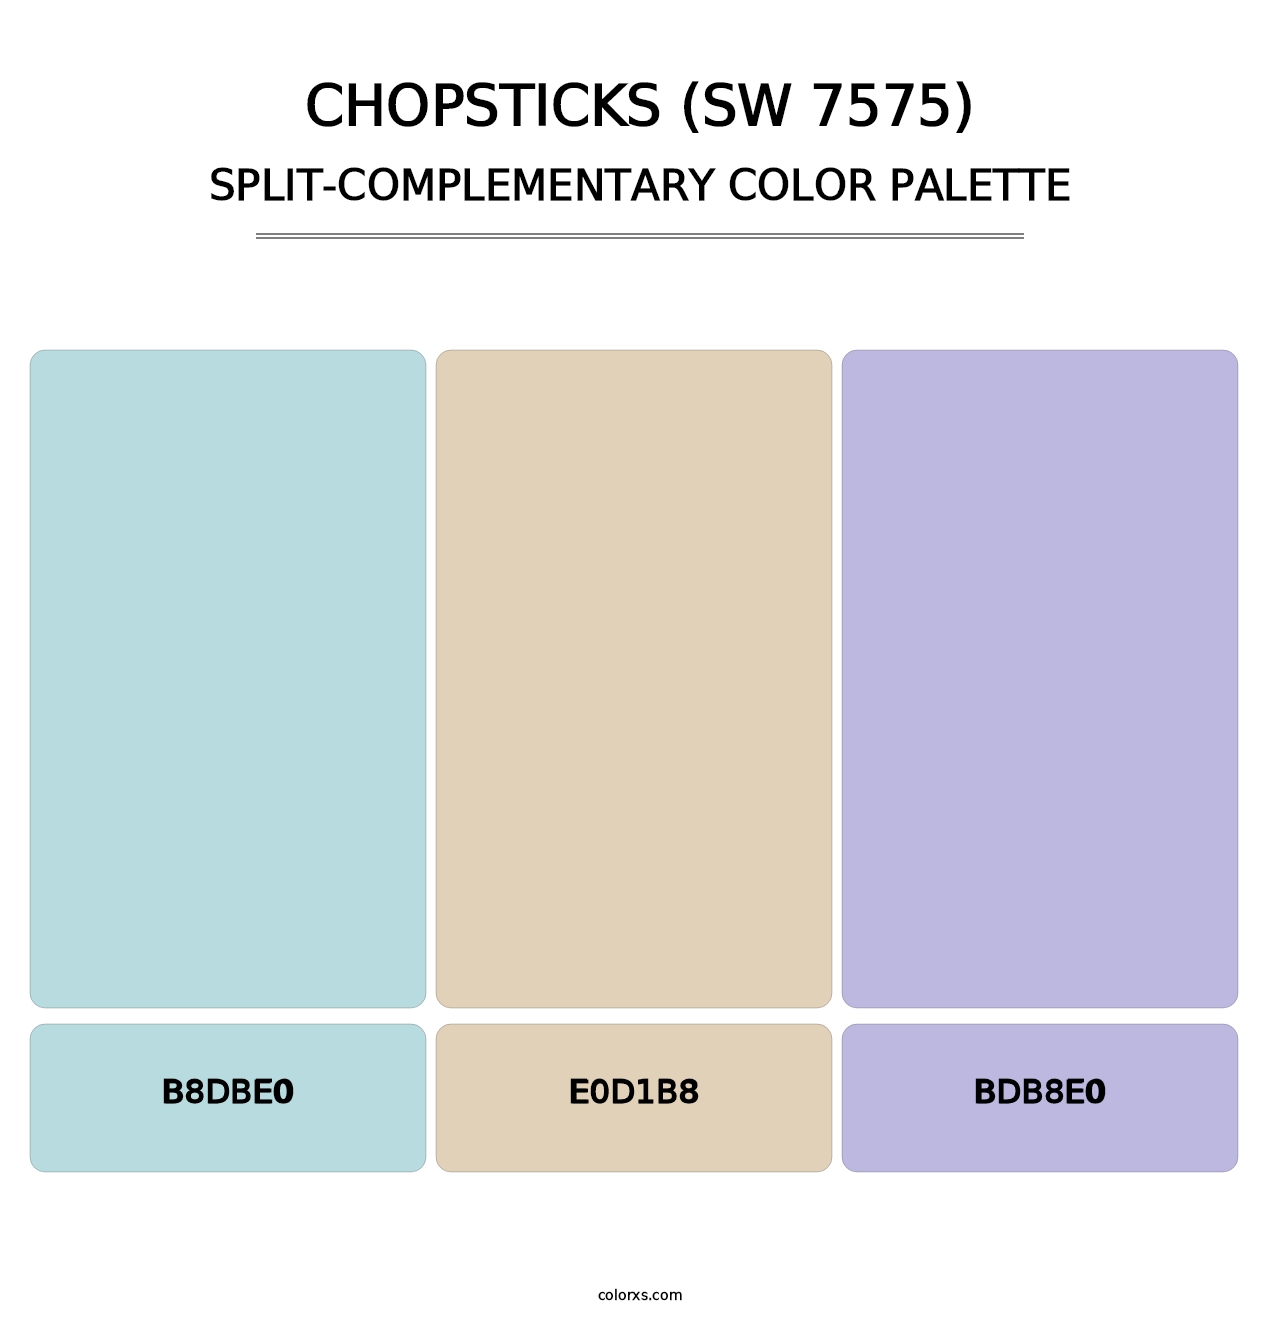 Chopsticks (SW 7575) - Split-Complementary Color Palette